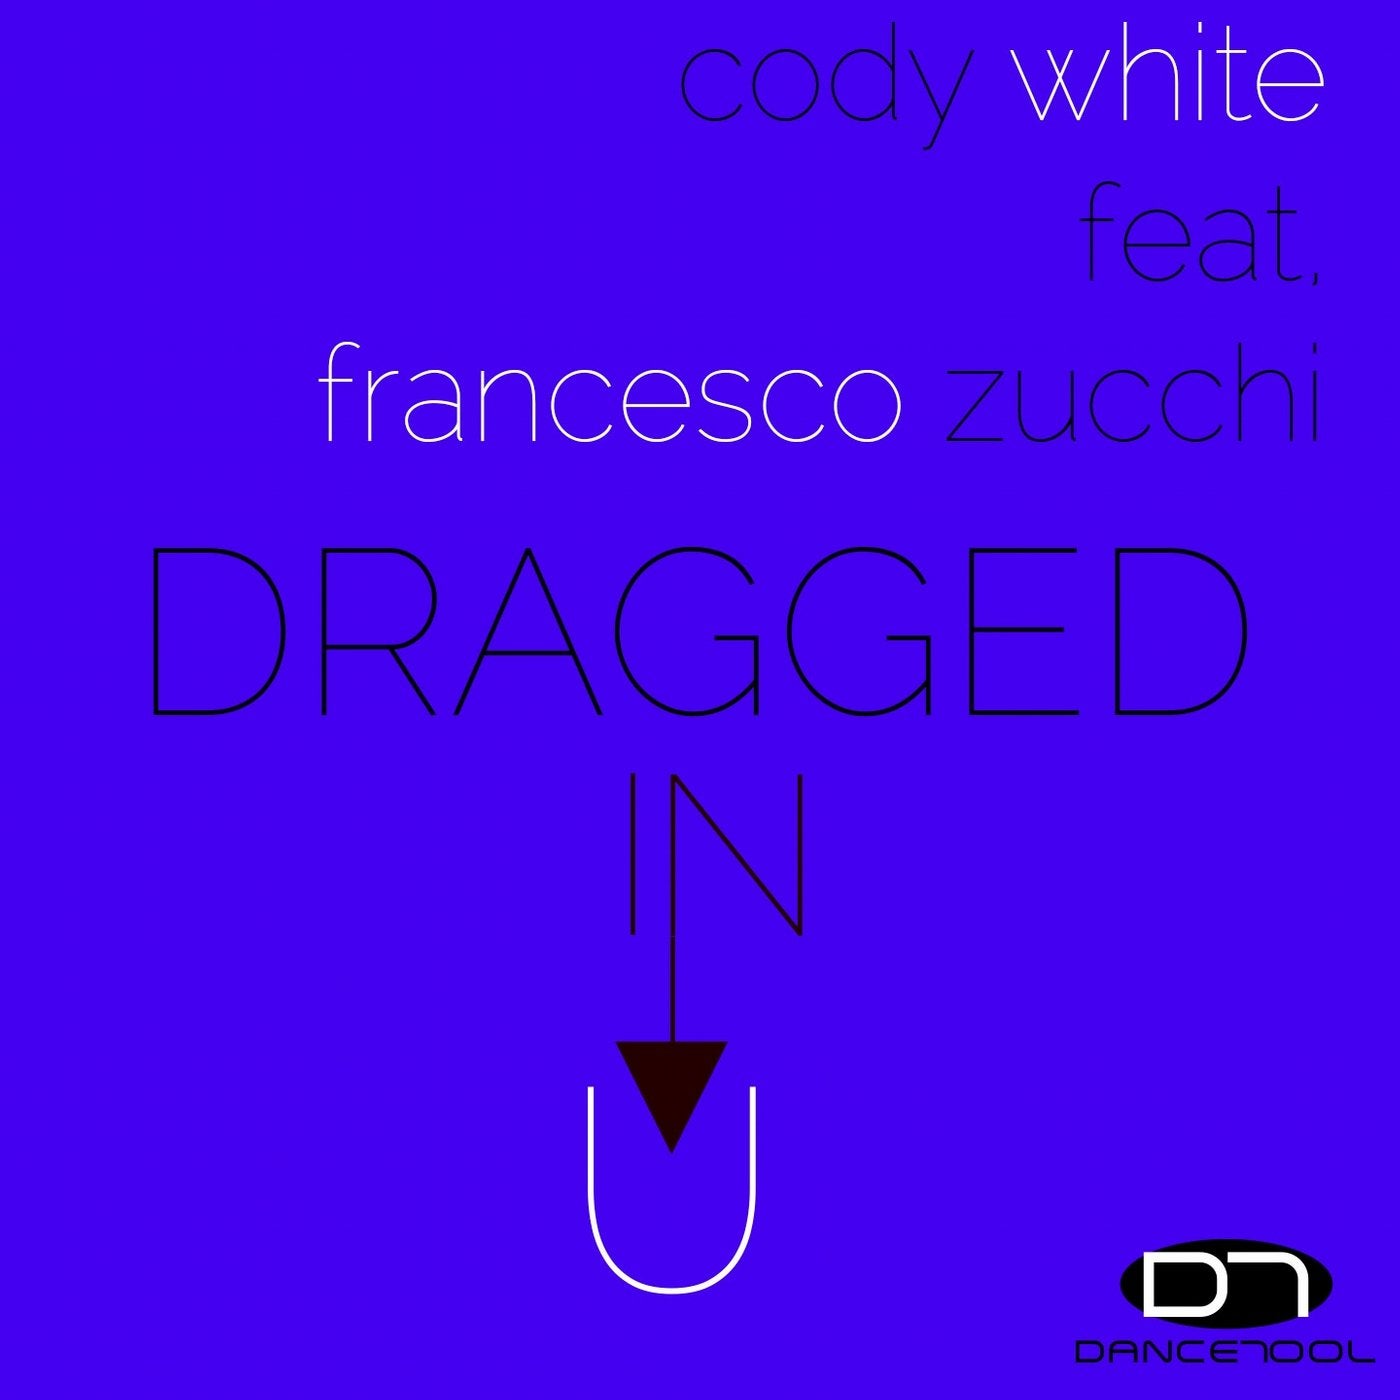 Dragged in you (feat. Francesco Zucchi)